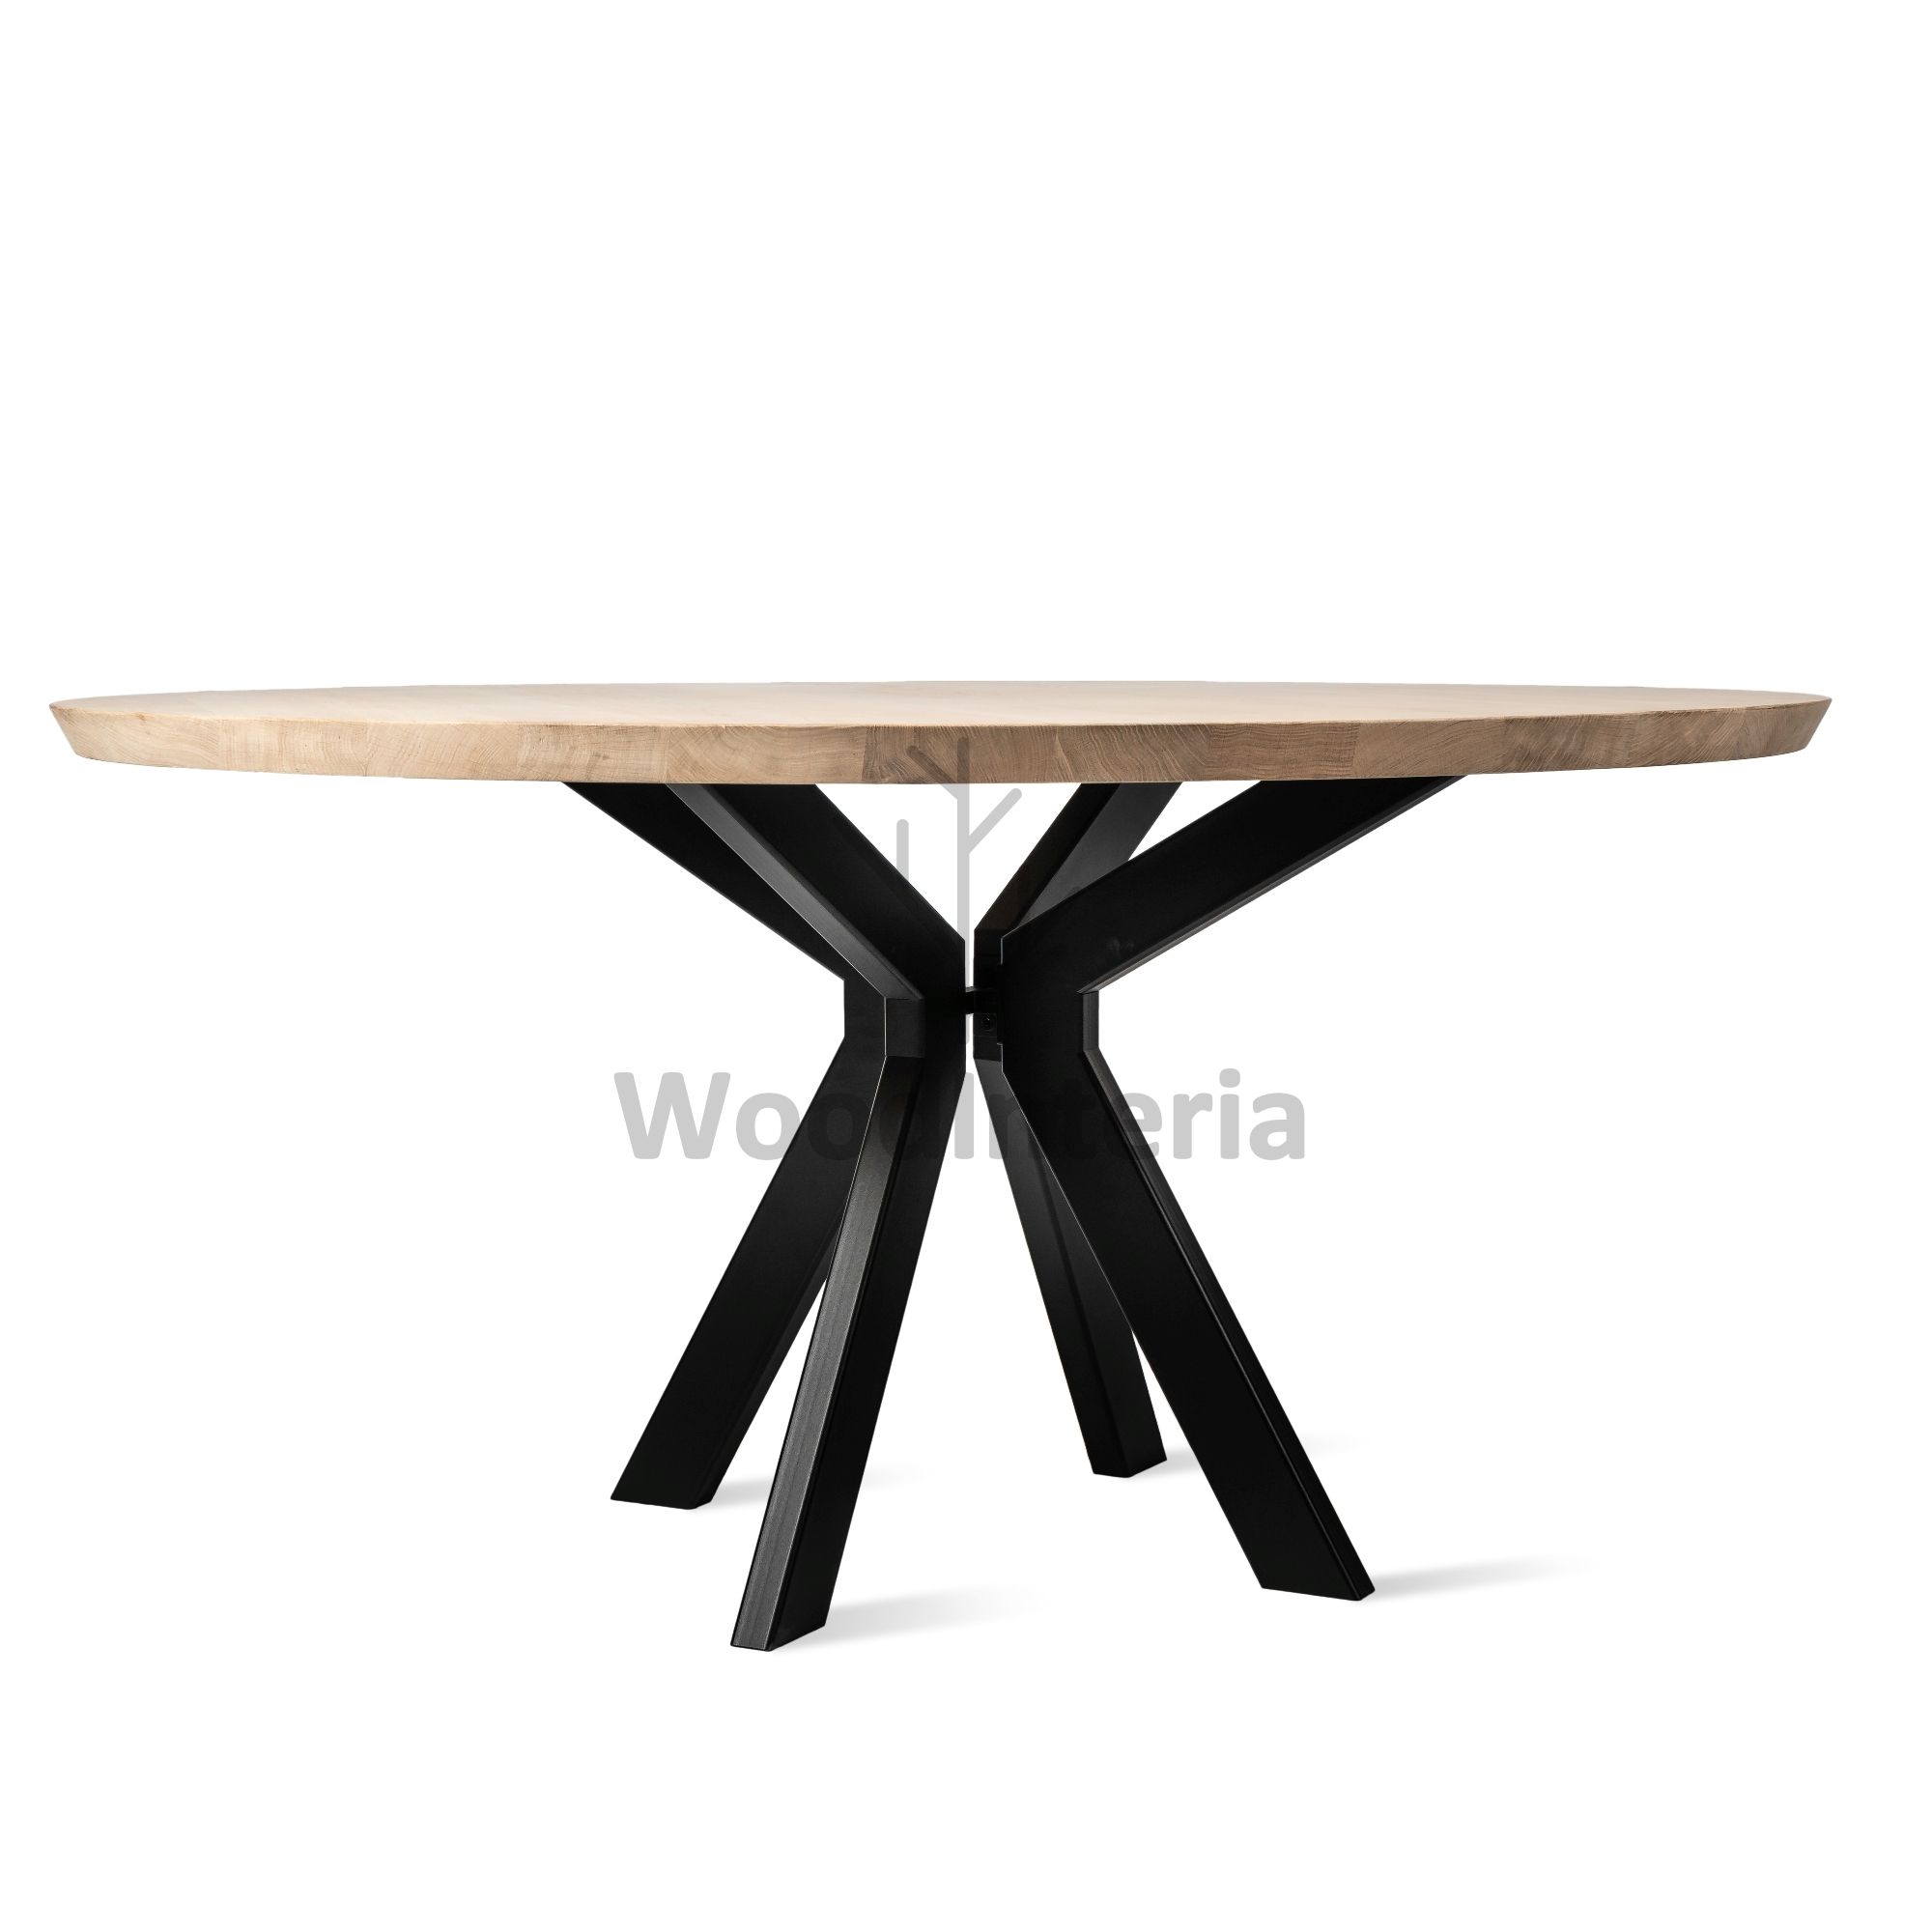 фото кухонный стол круглый grappa в интерьере лофт эко | WoodInteria